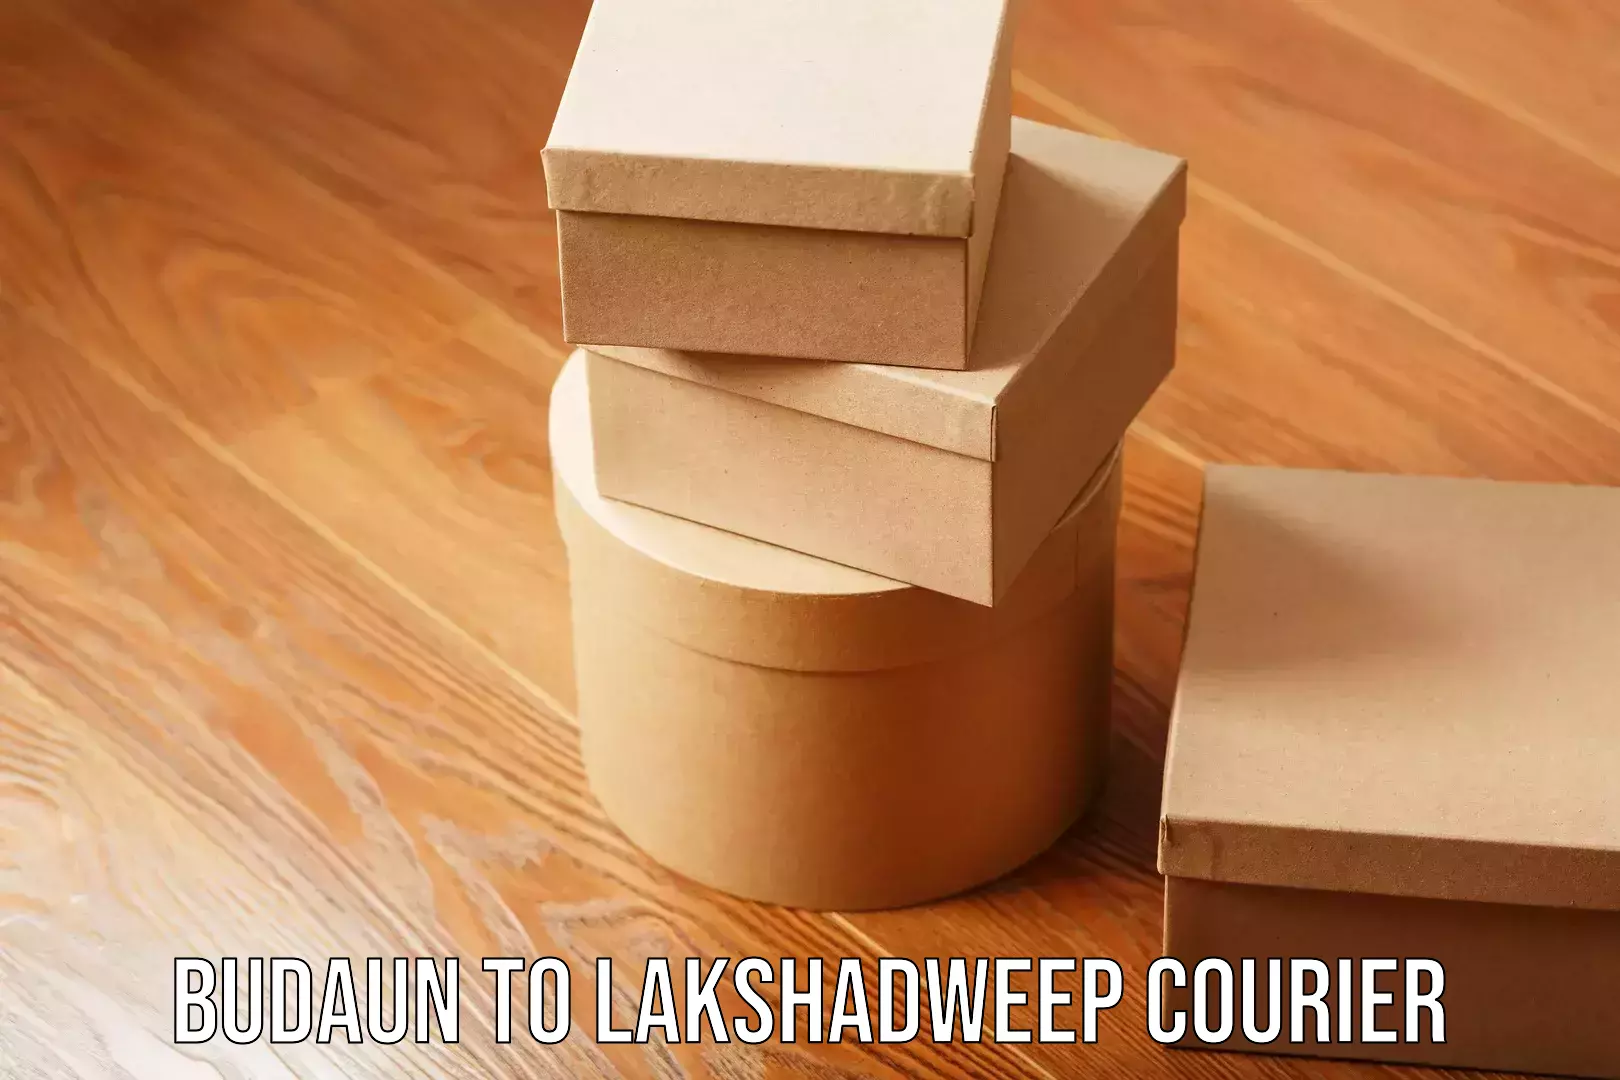 Parcel handling and care Budaun to Lakshadweep